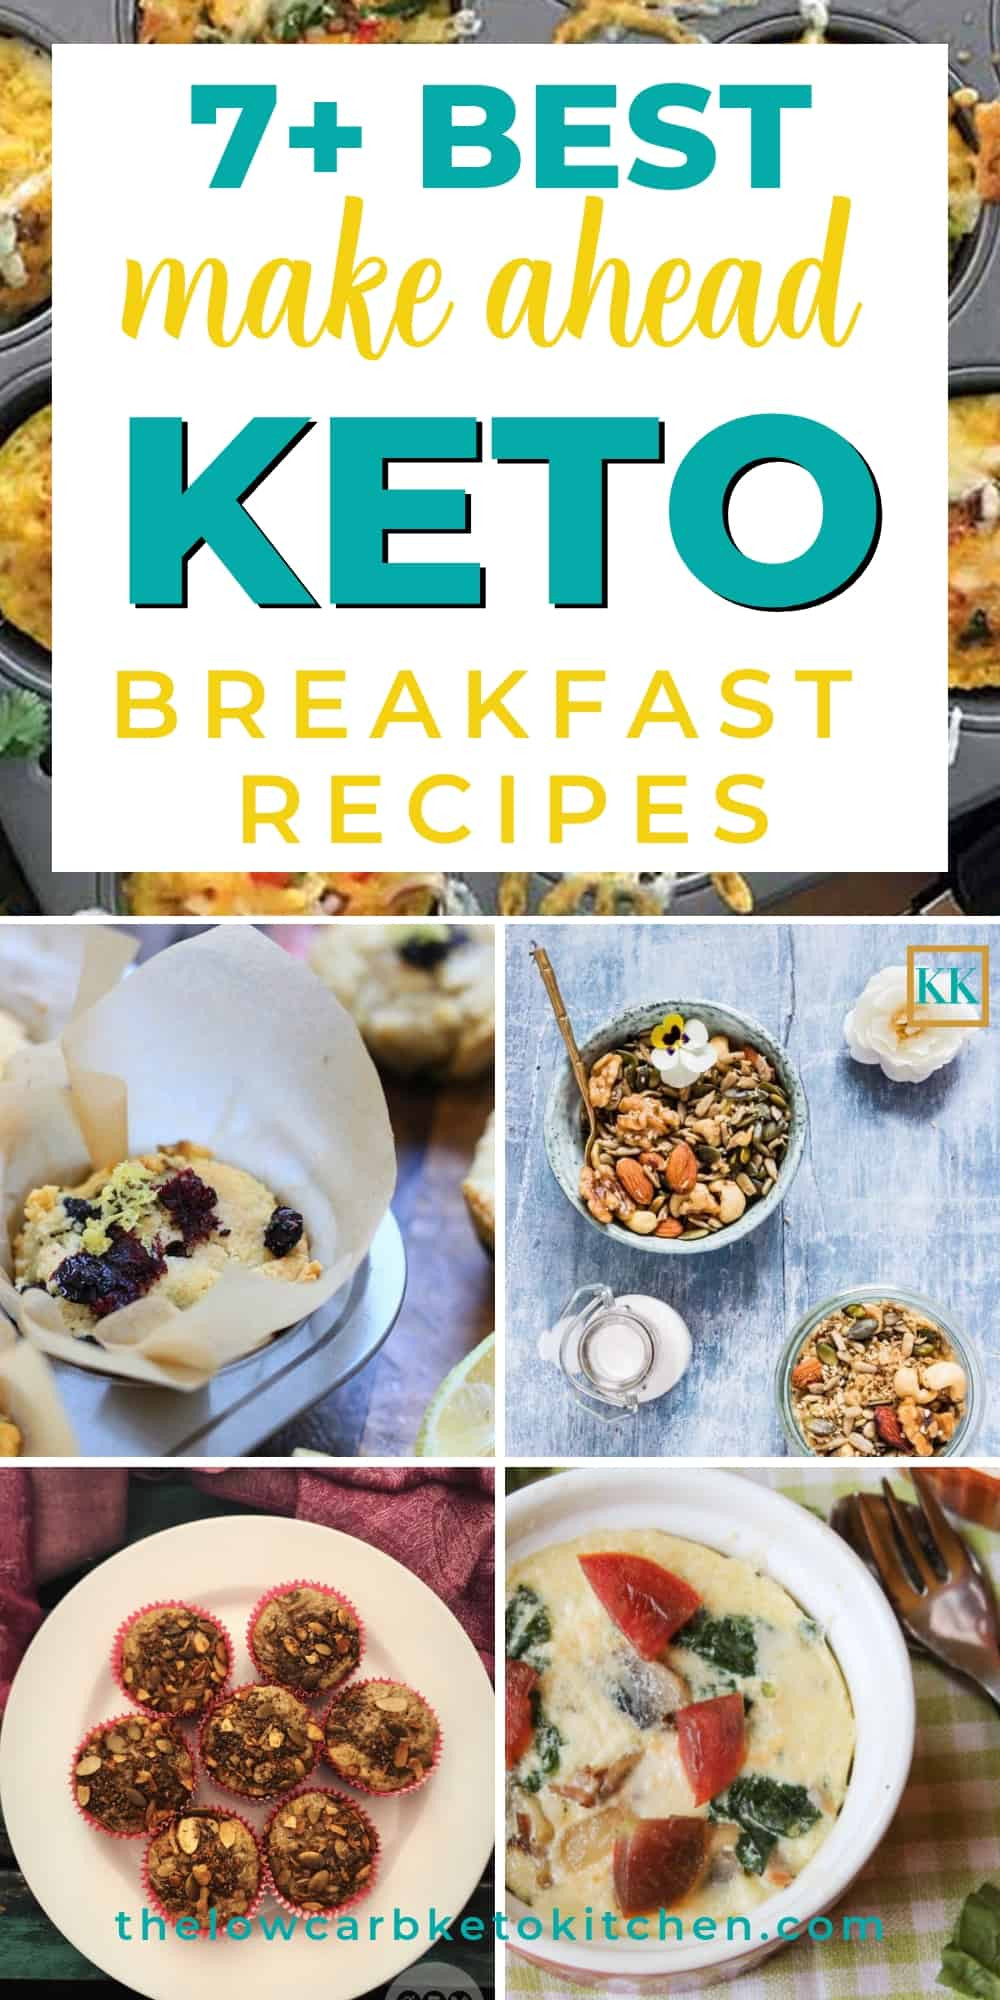 Make Ahead Keto Breakfast
 7 of the Best Make Ahead Keto Breakfast Recipes